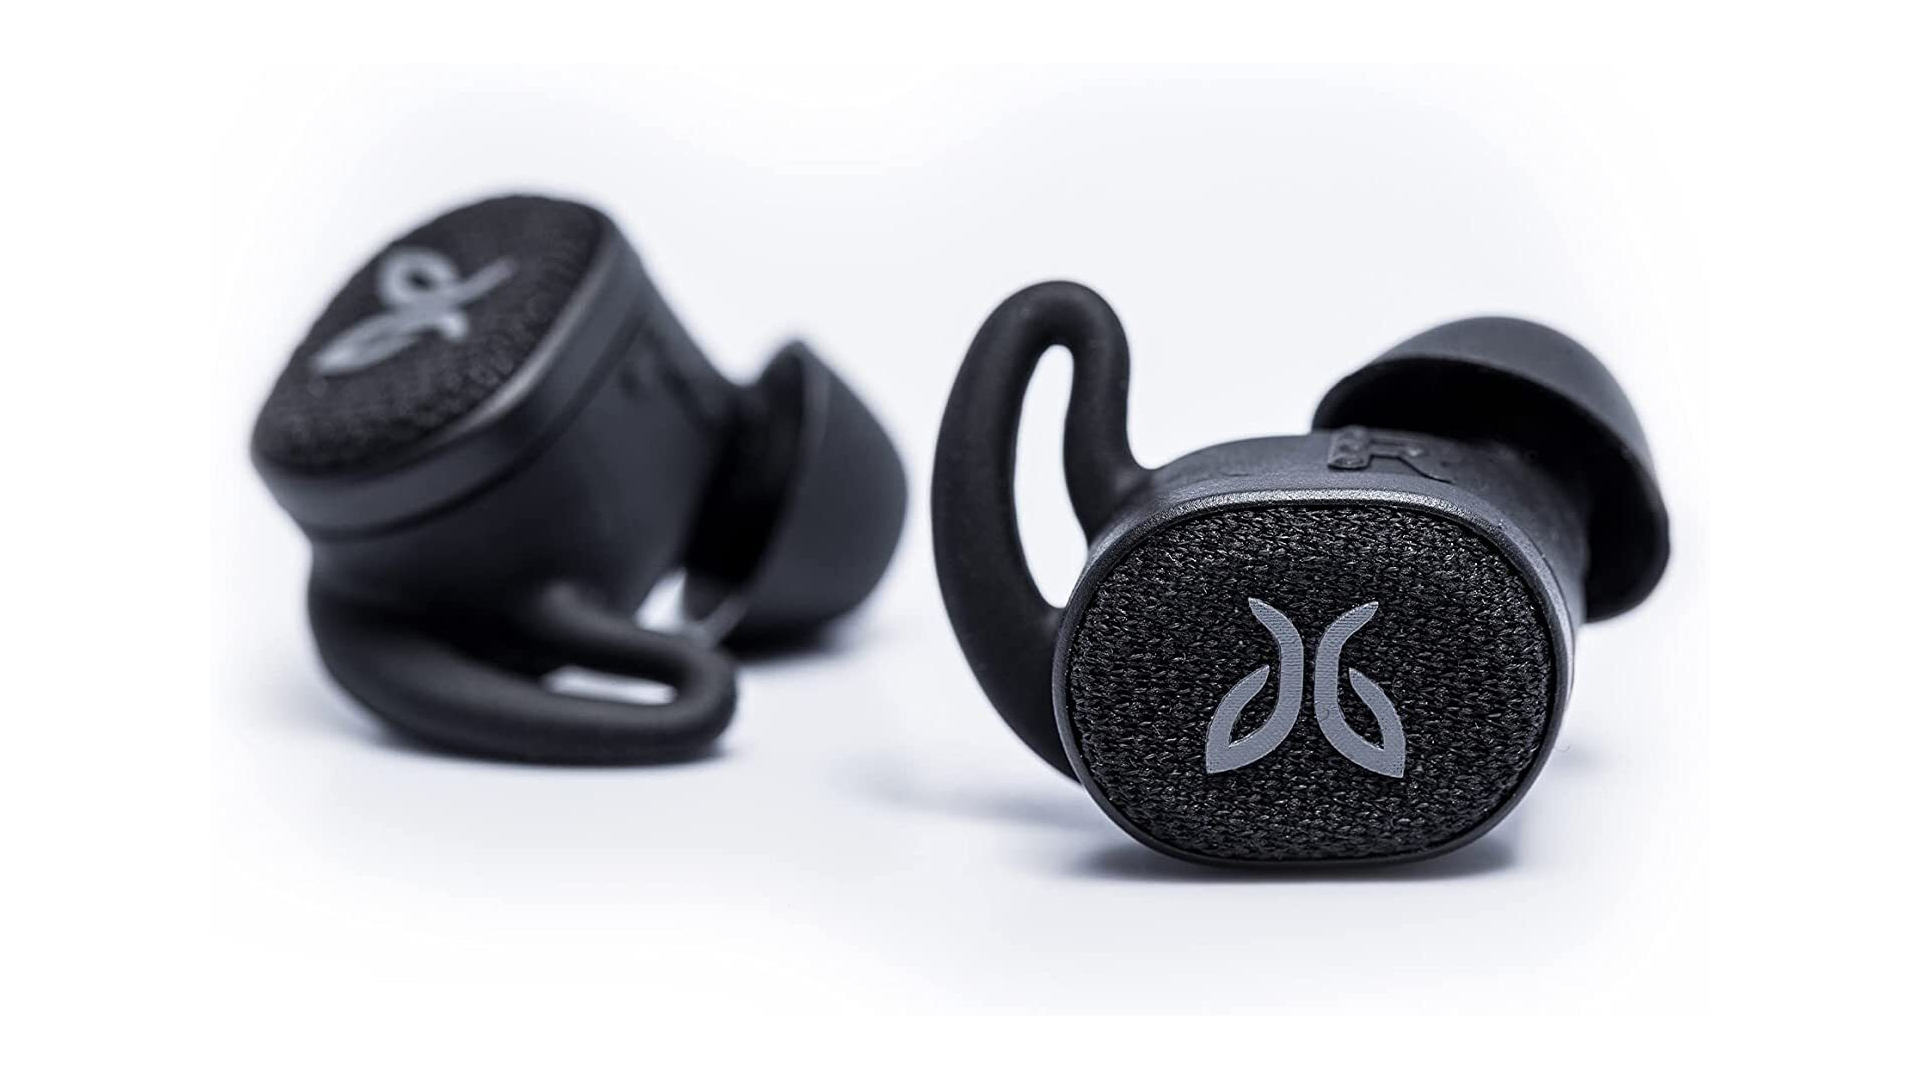 Running headphones deals: Image of Jaybird earbuds